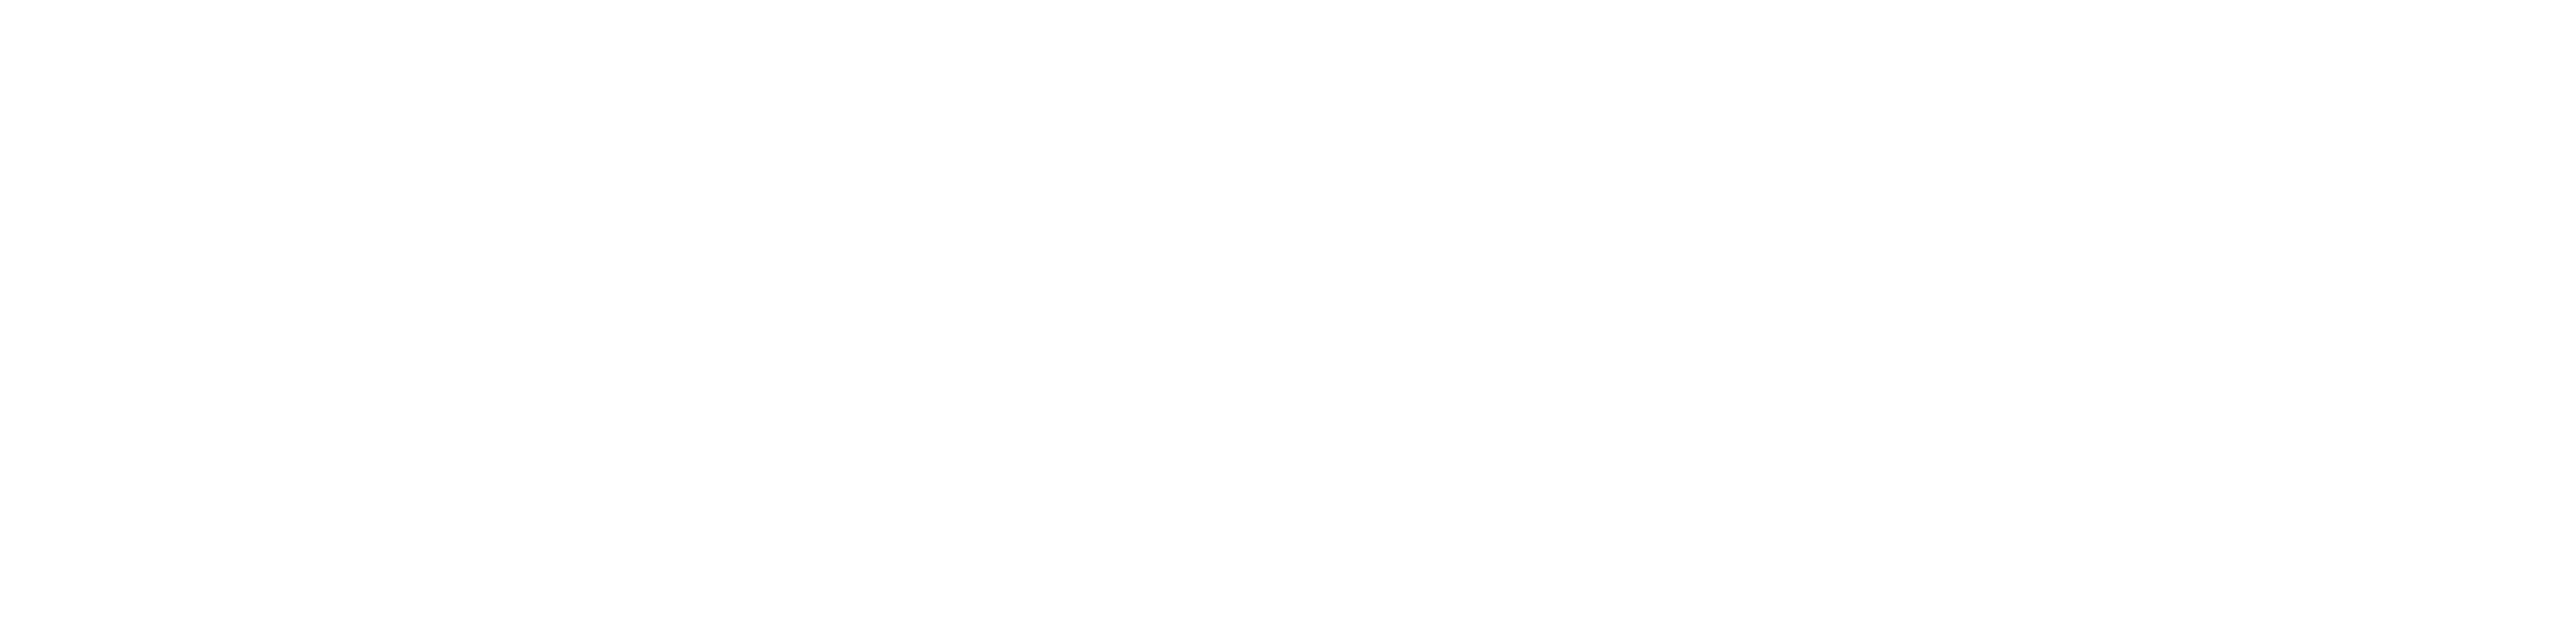 Department of Tourism, Culture, Arts, Gaeltacht, Sport, Media_WhiteLOGO